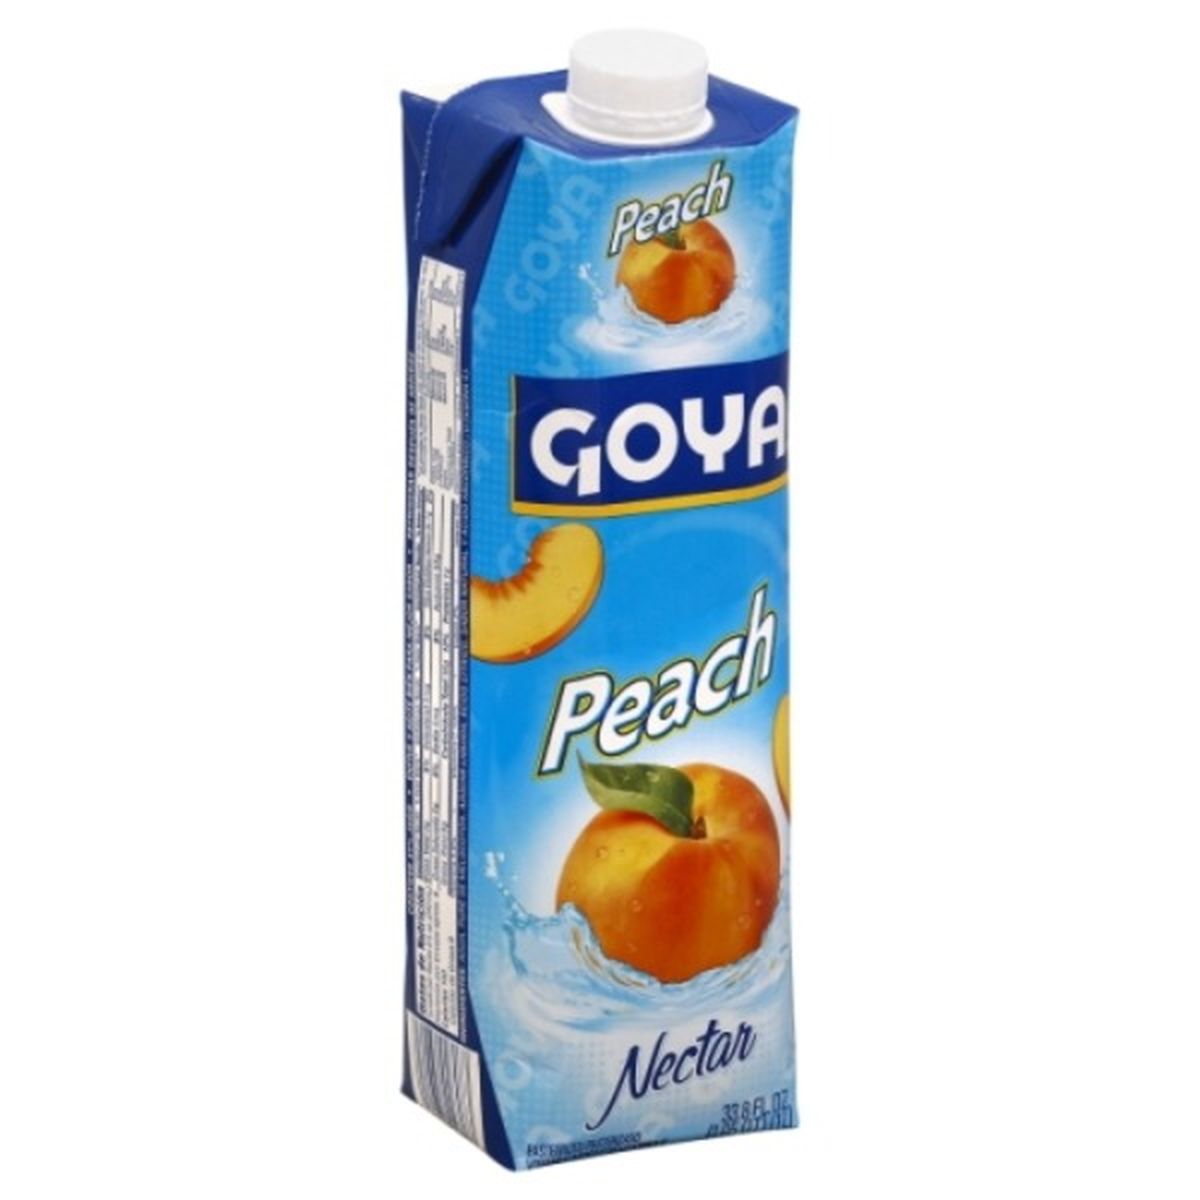 Calories in Goya Nectar, Peach